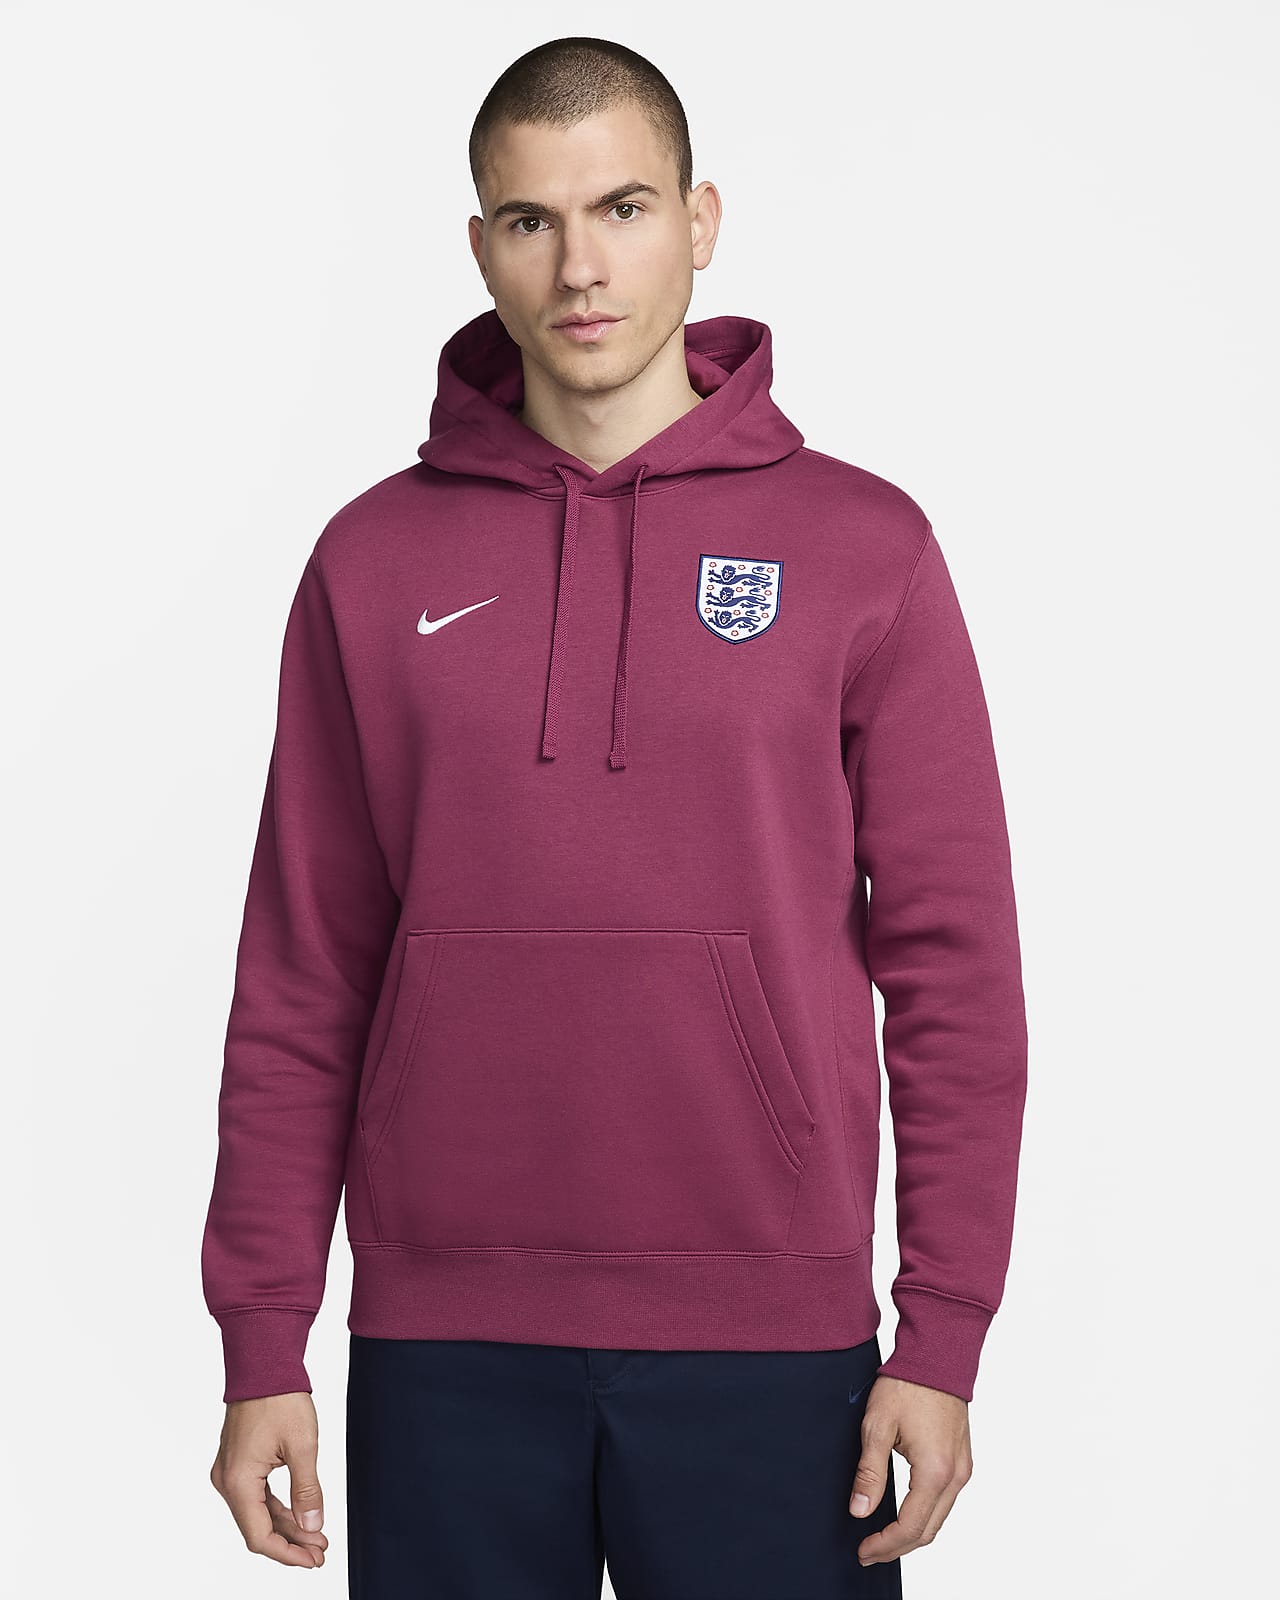 Hoodie pullover de futebol Nike Club Inglaterra para homem